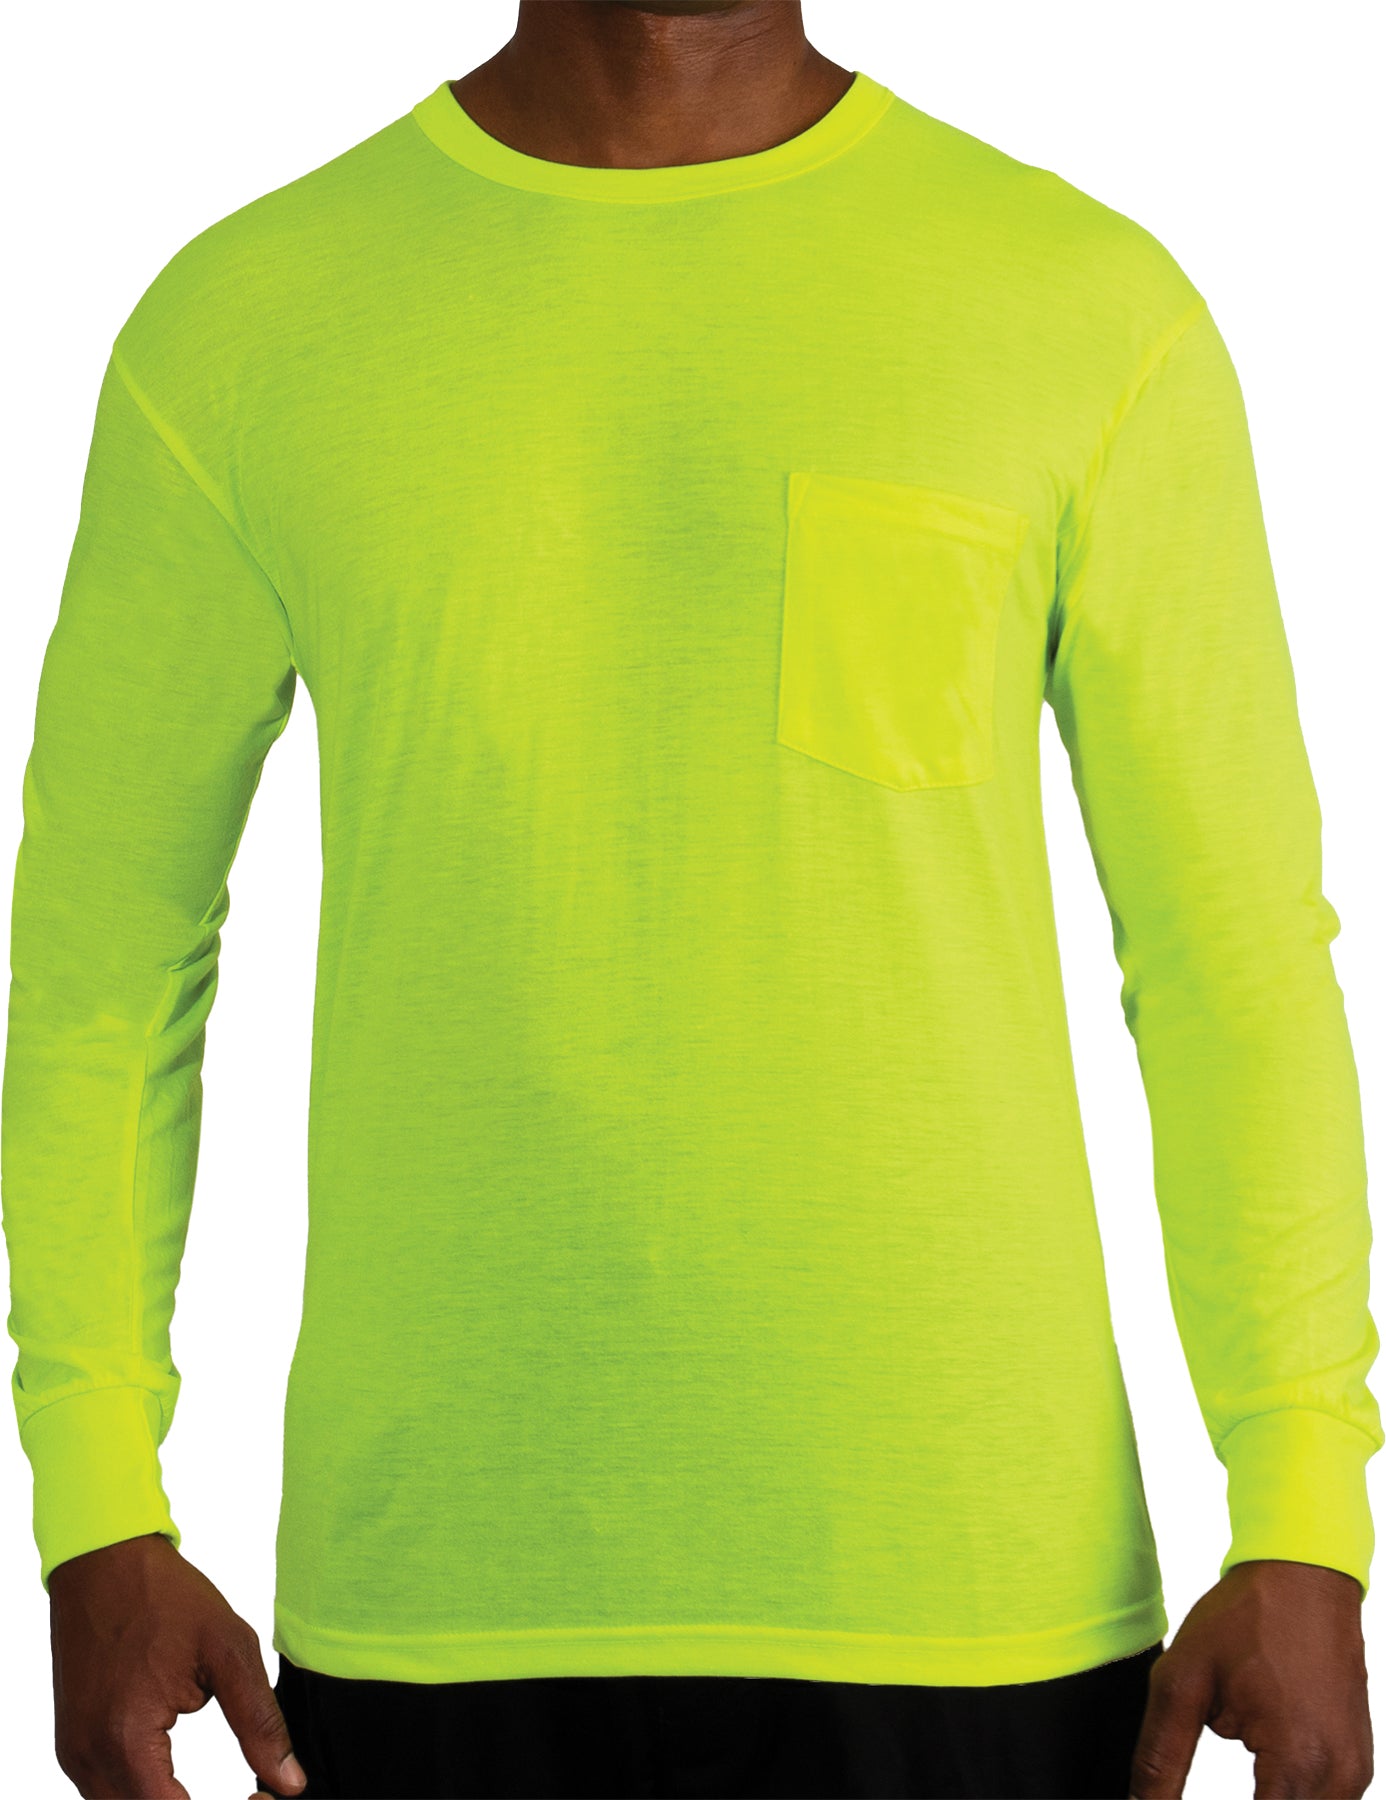 Safety Green Moisture Wicking Pocket T-Shirt Long Sleeve